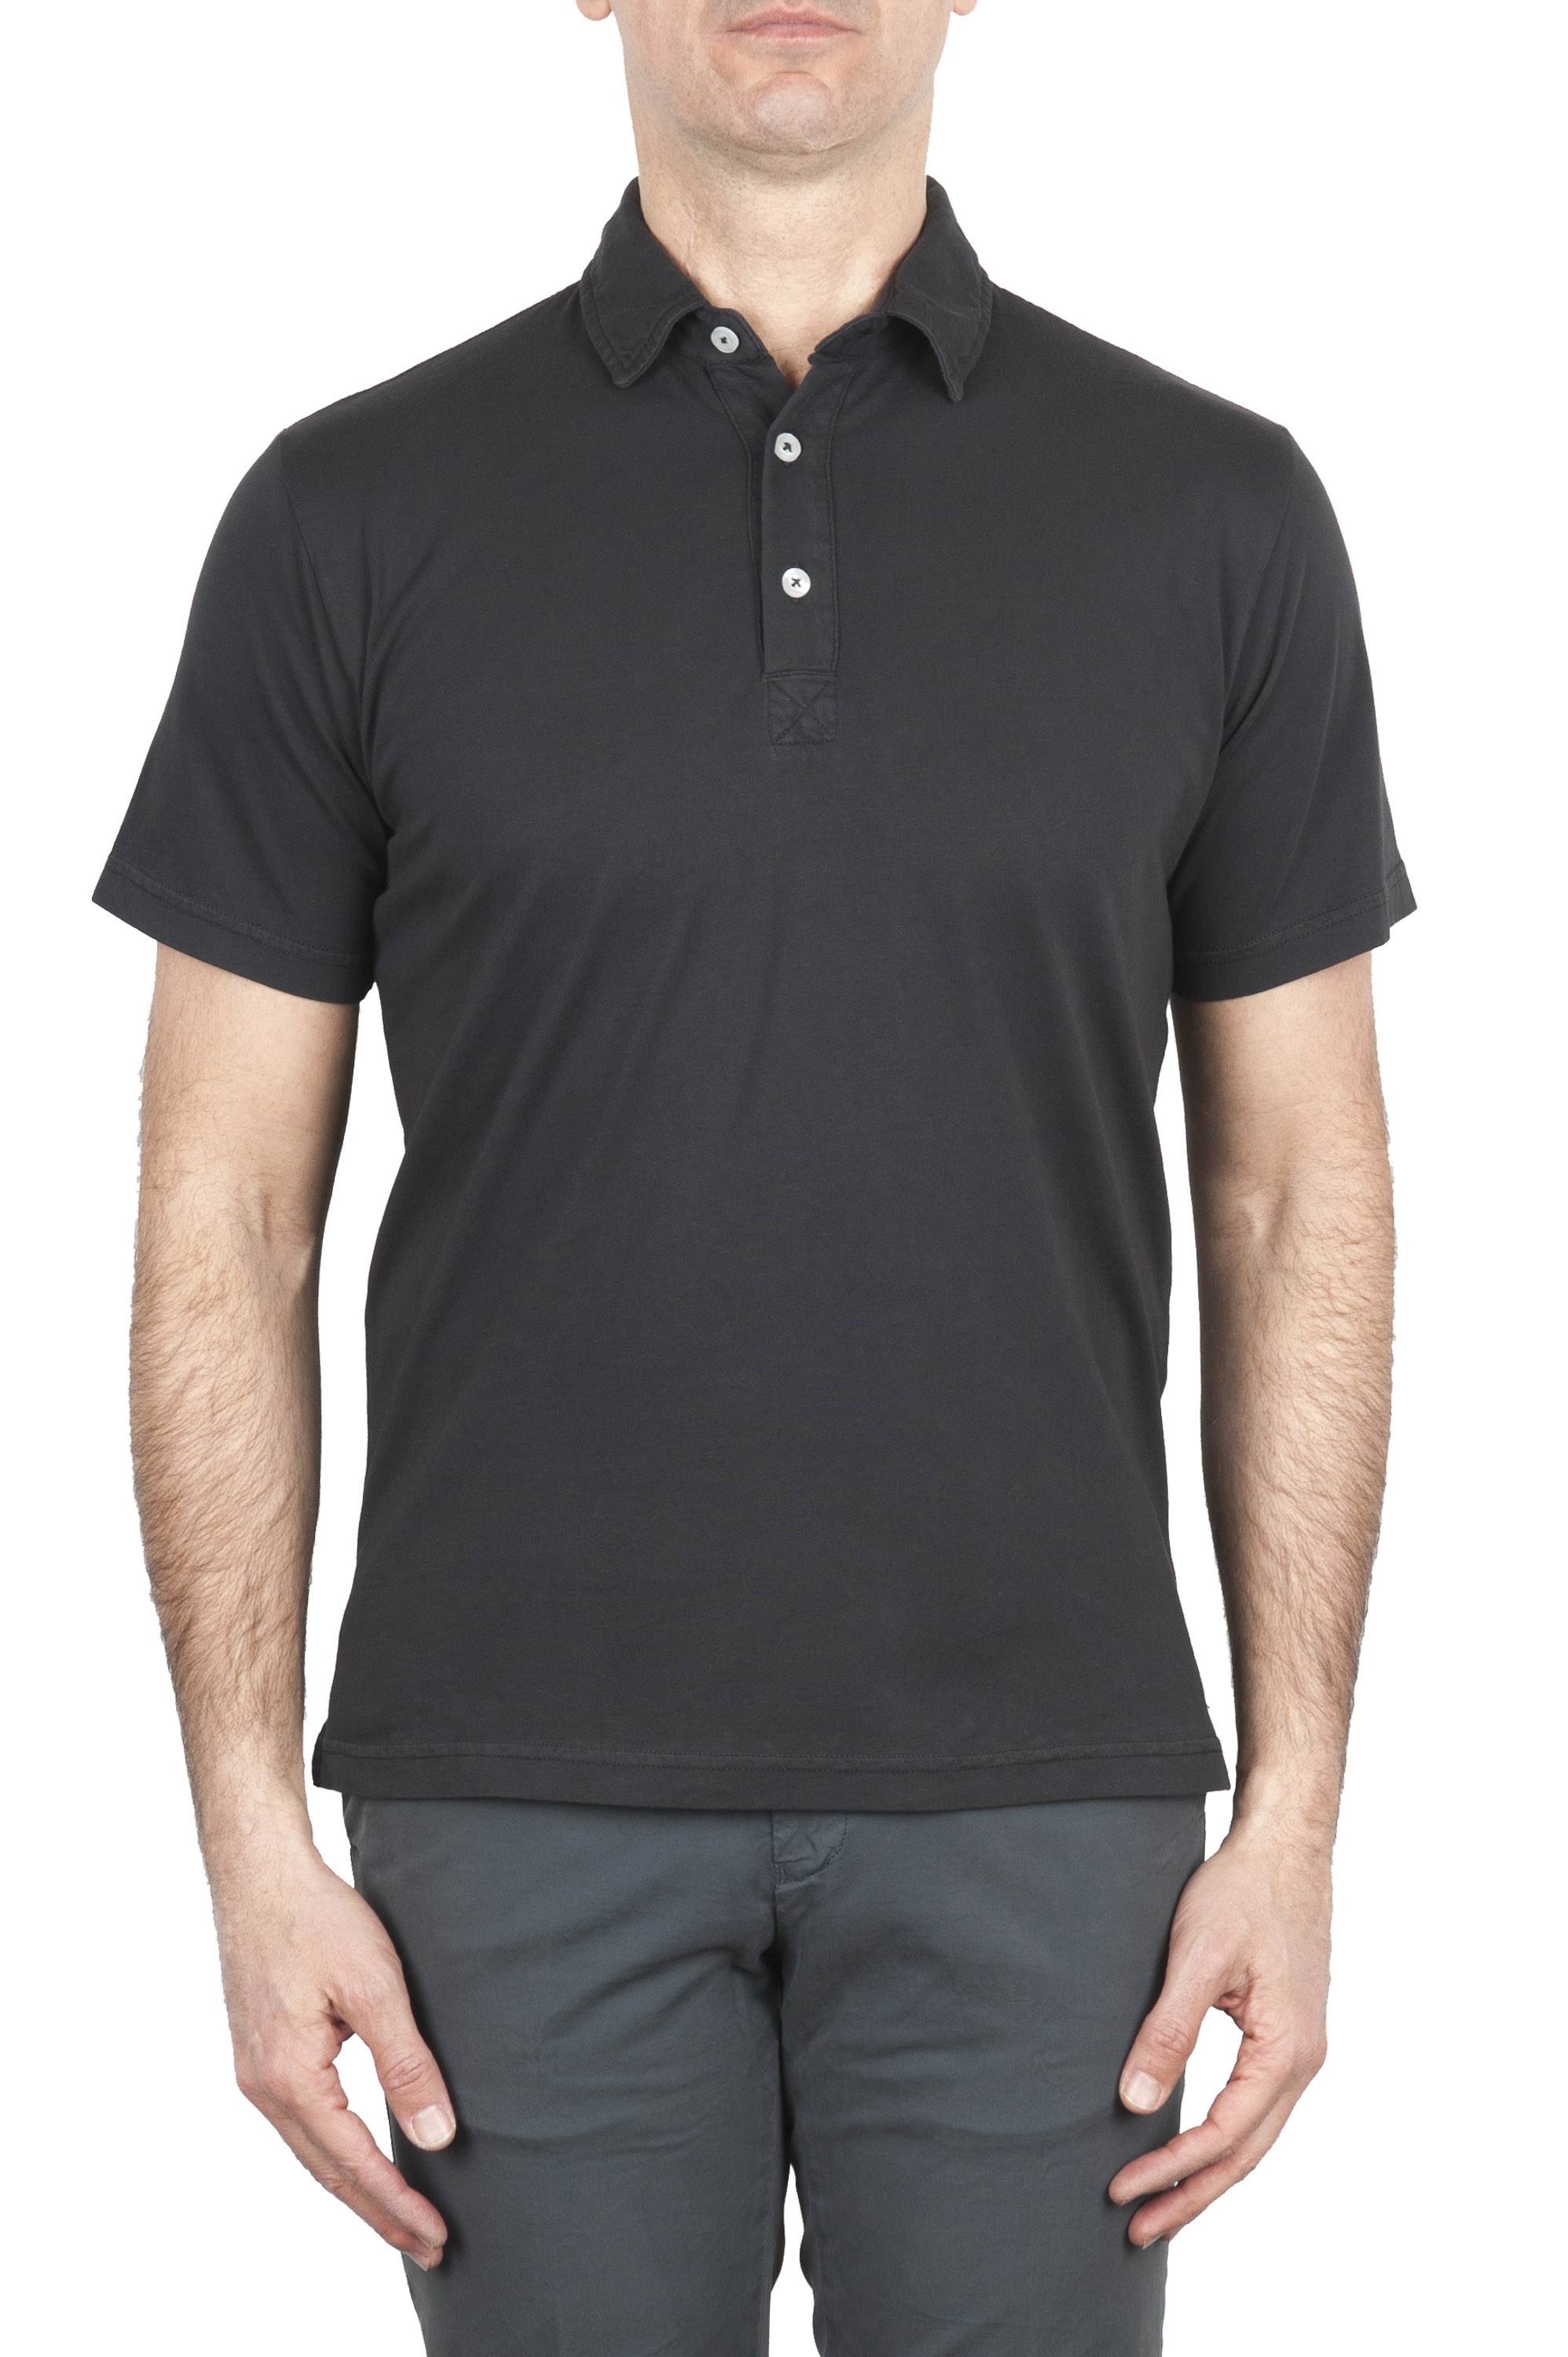 SBU 01699 Classic short sleeve black cotton jersey polo shirt 01